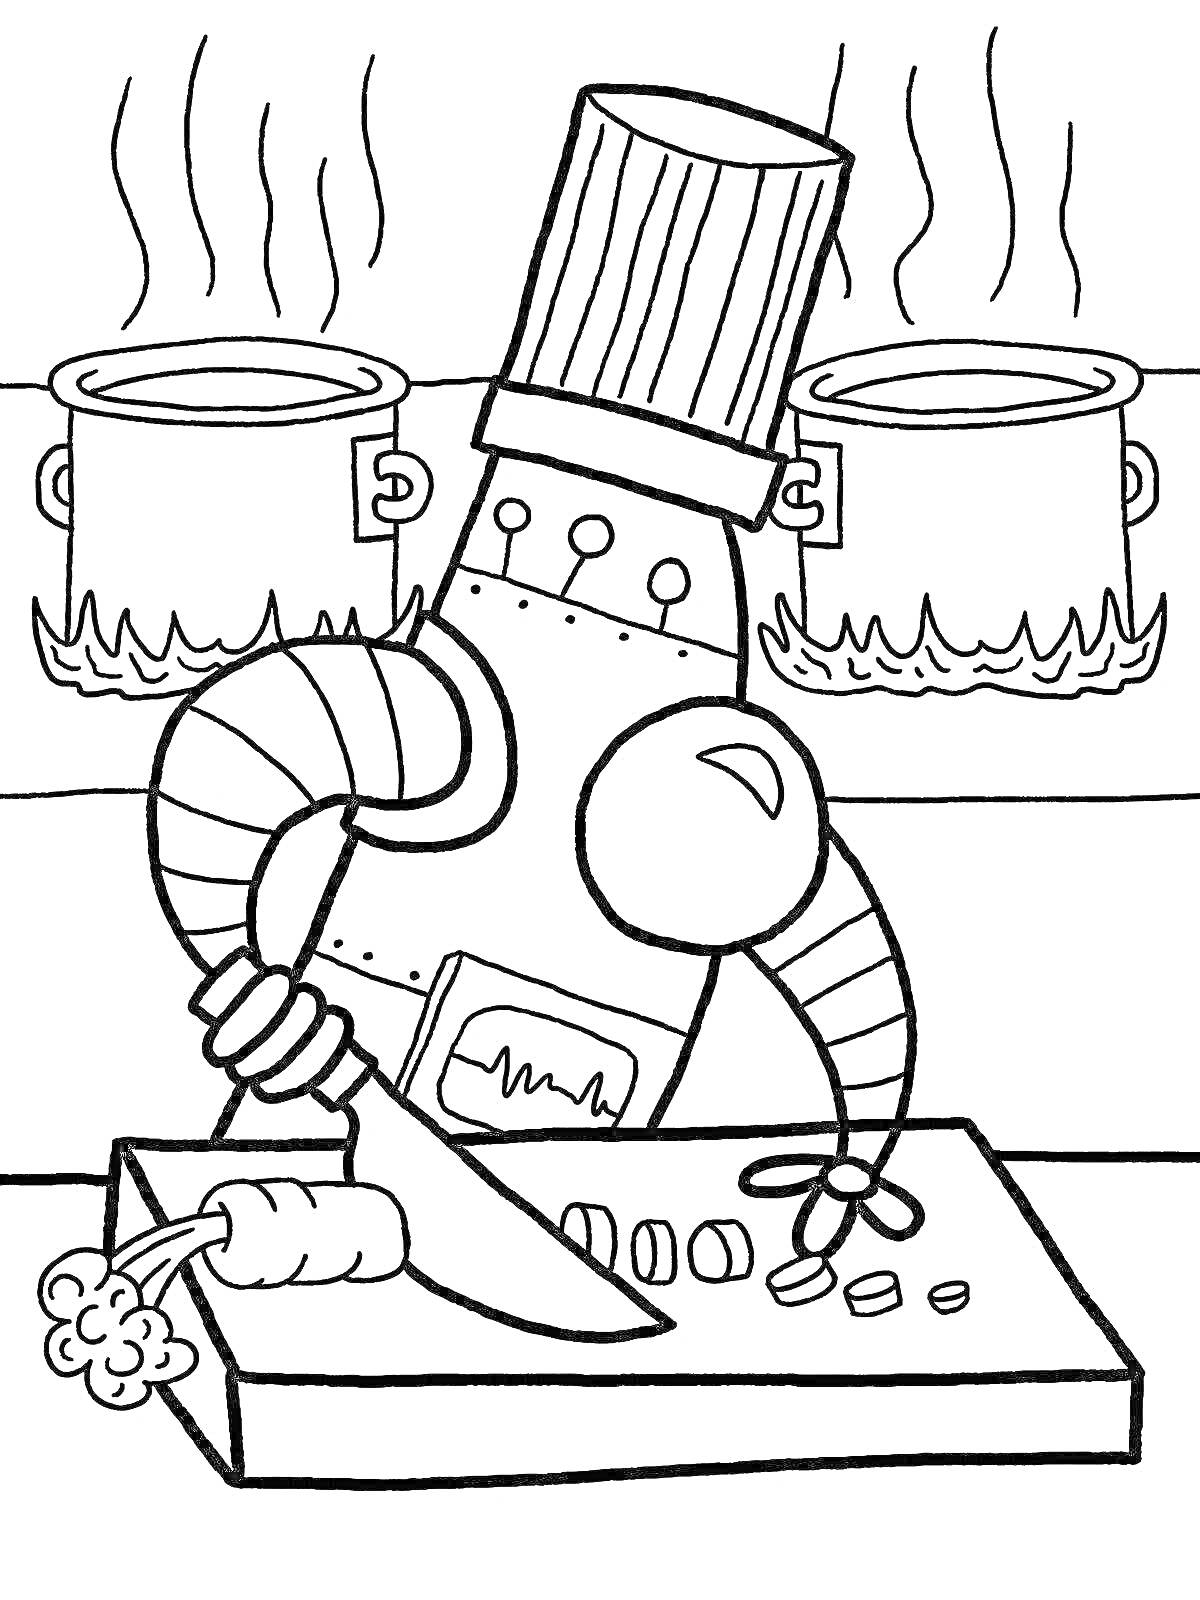 На раскраске изображено: Робот, Повар, Нож, Овощи, Морковь, Разделочная доска, Кастрюли, Плита, Кухня, Готовка, Шеф-повар